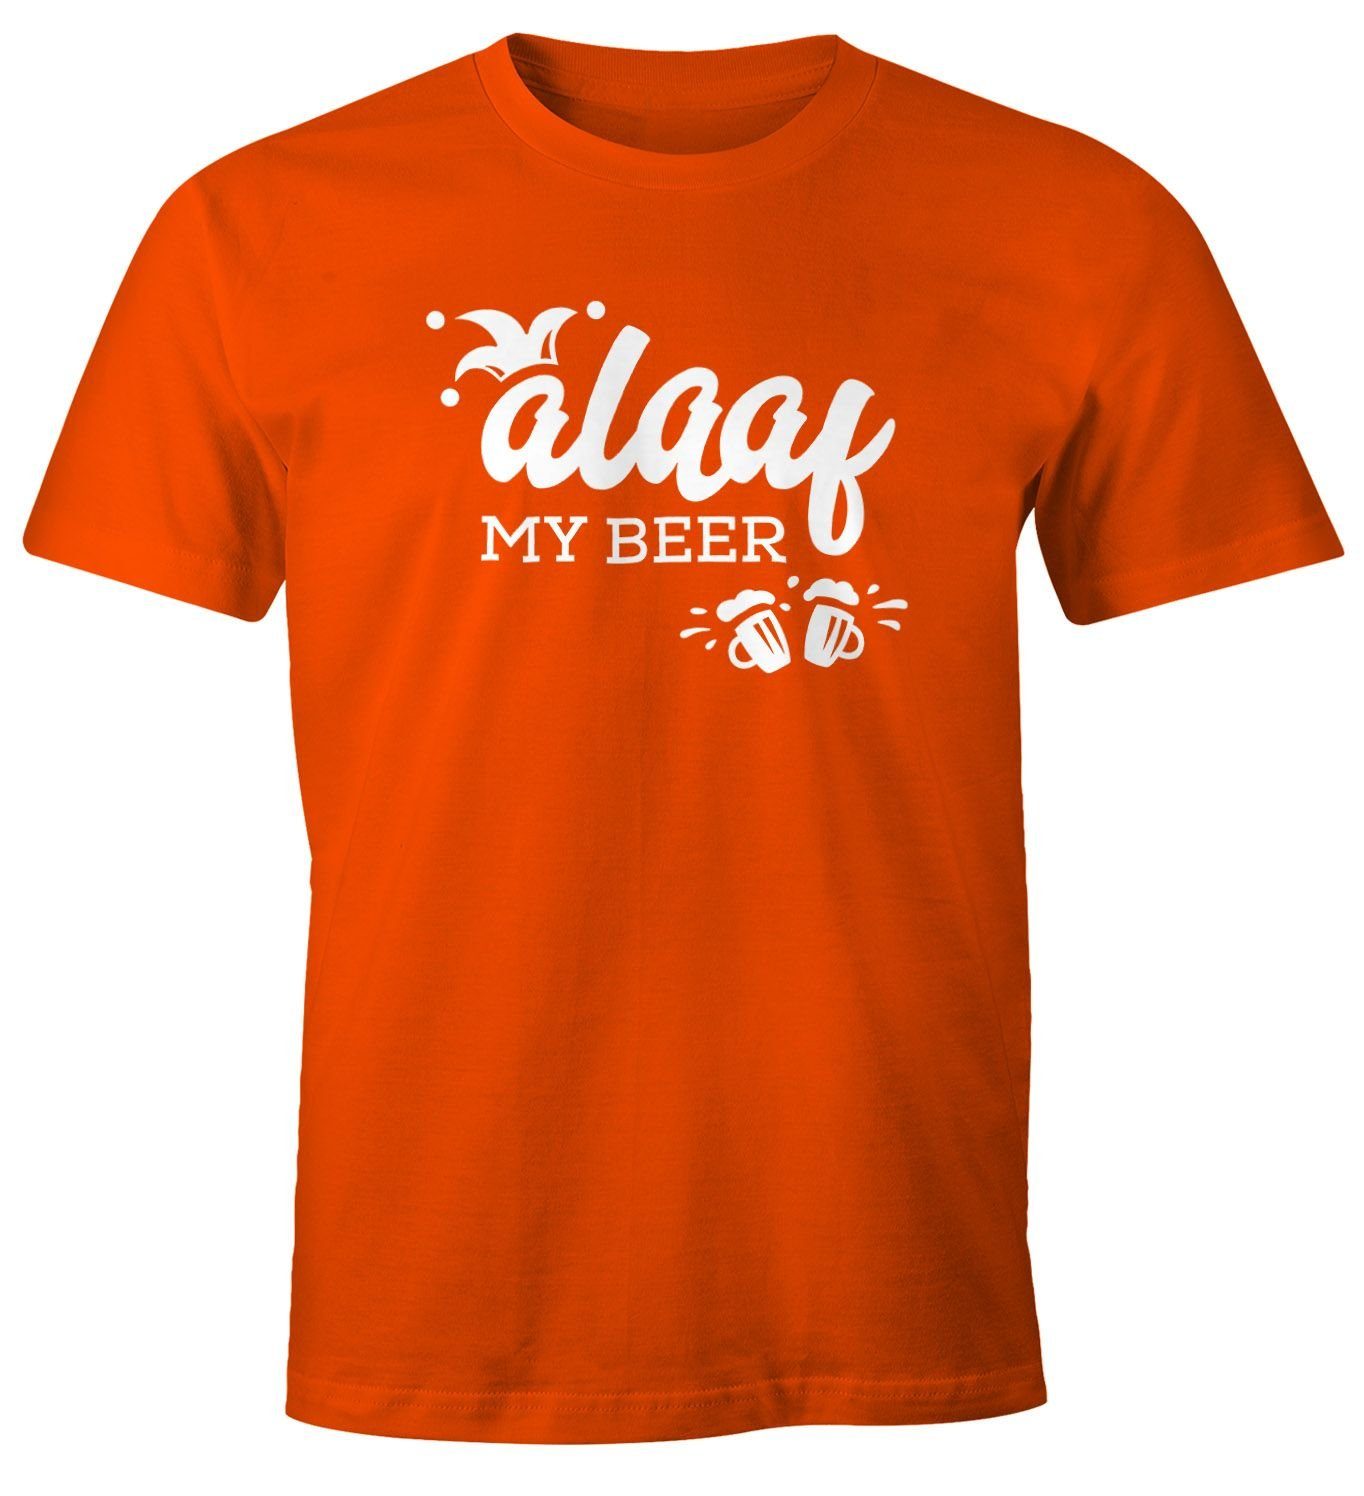 MoonWorks Print-Shirt Herren T-Shirt Alaaf My beer Wortspiel Fasching Fastnacht Kostüm Karneval Verkleidung lustig Fun-Shirt Faschings-Shirt Moonworks® mit Print orange